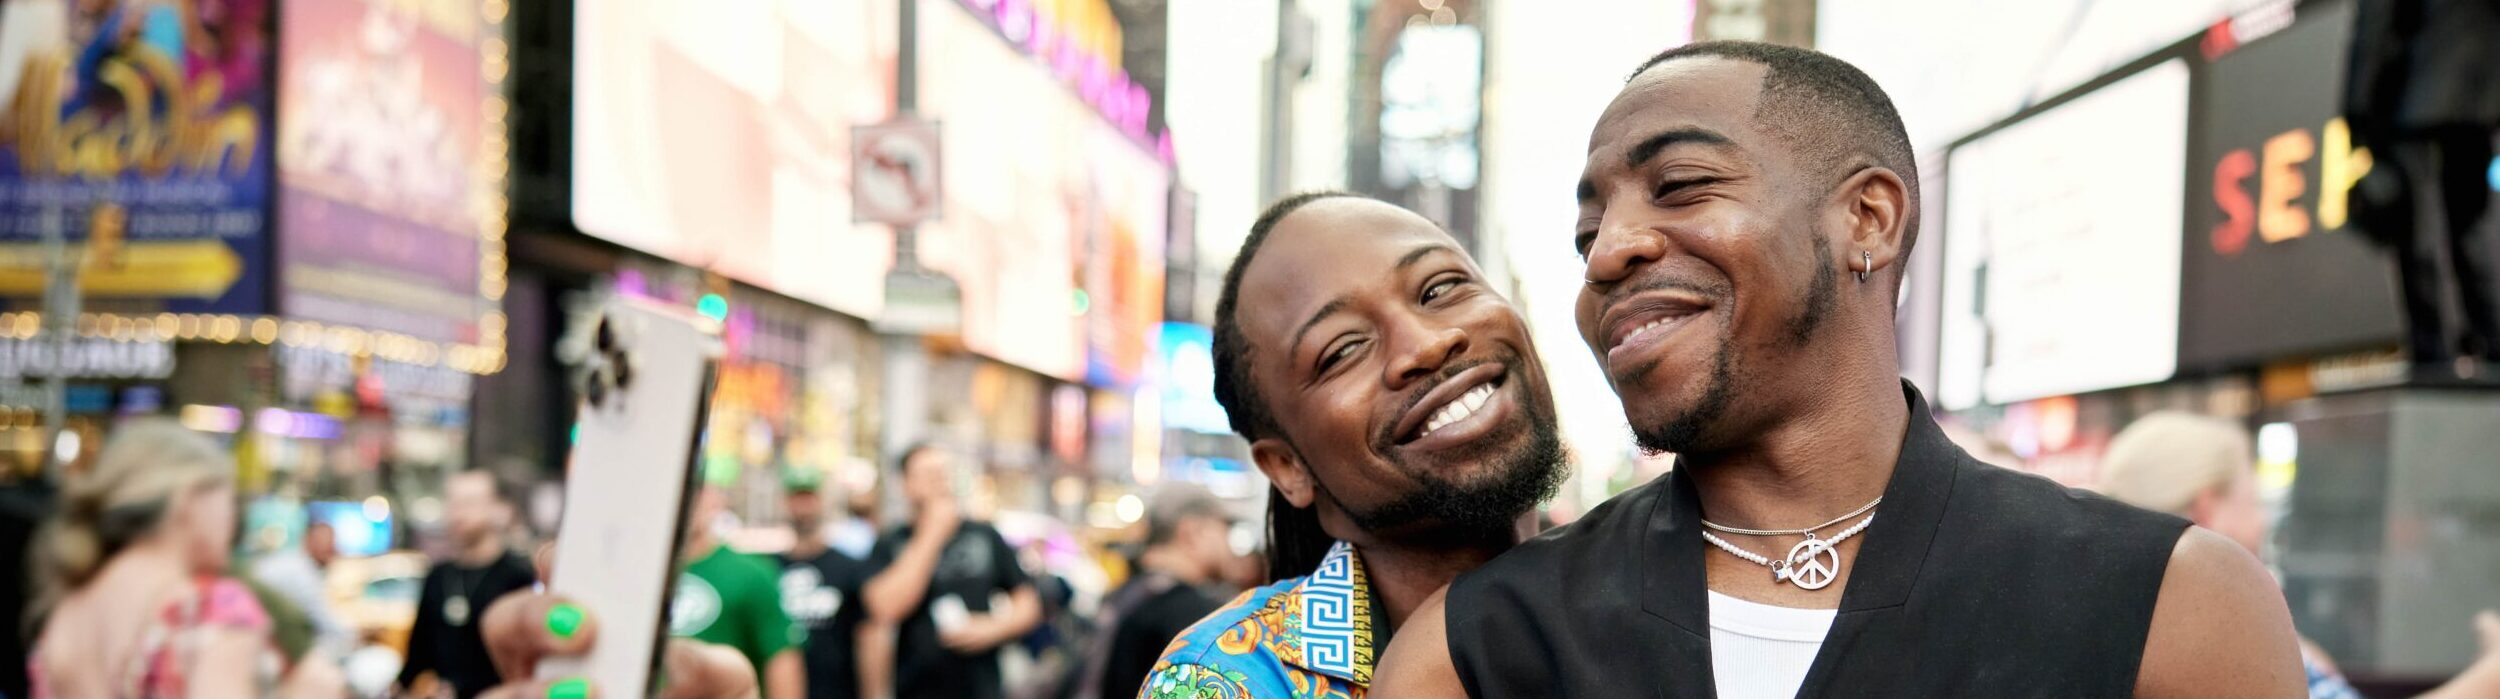 two black men, hugging, taking a selfie in Times Square